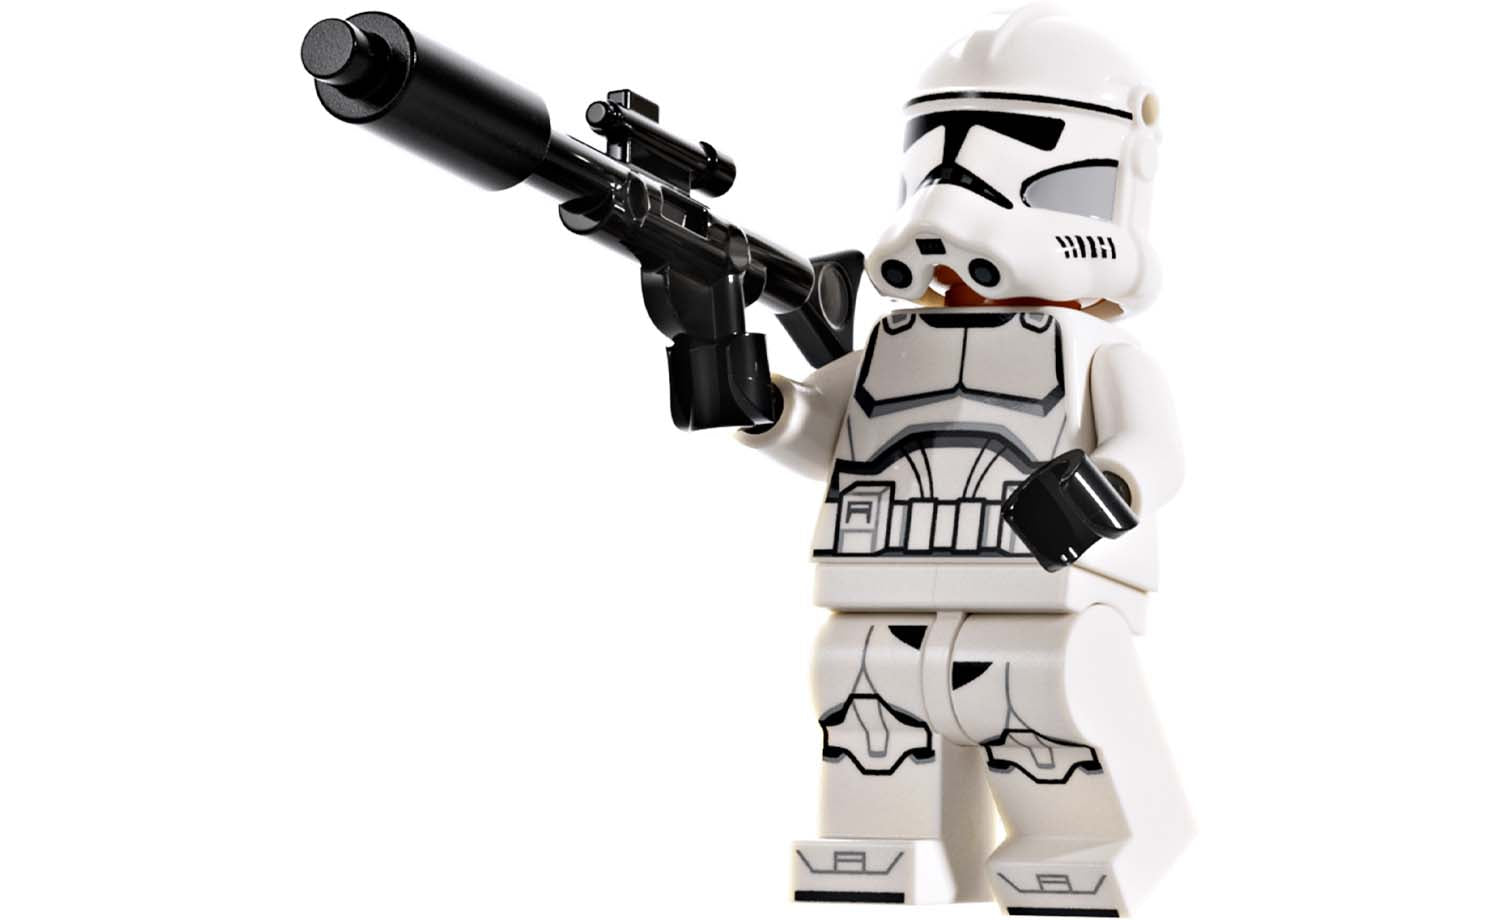 LEGO Star Wars 75372 Clone Trooper & Battle Droid Battle Pack